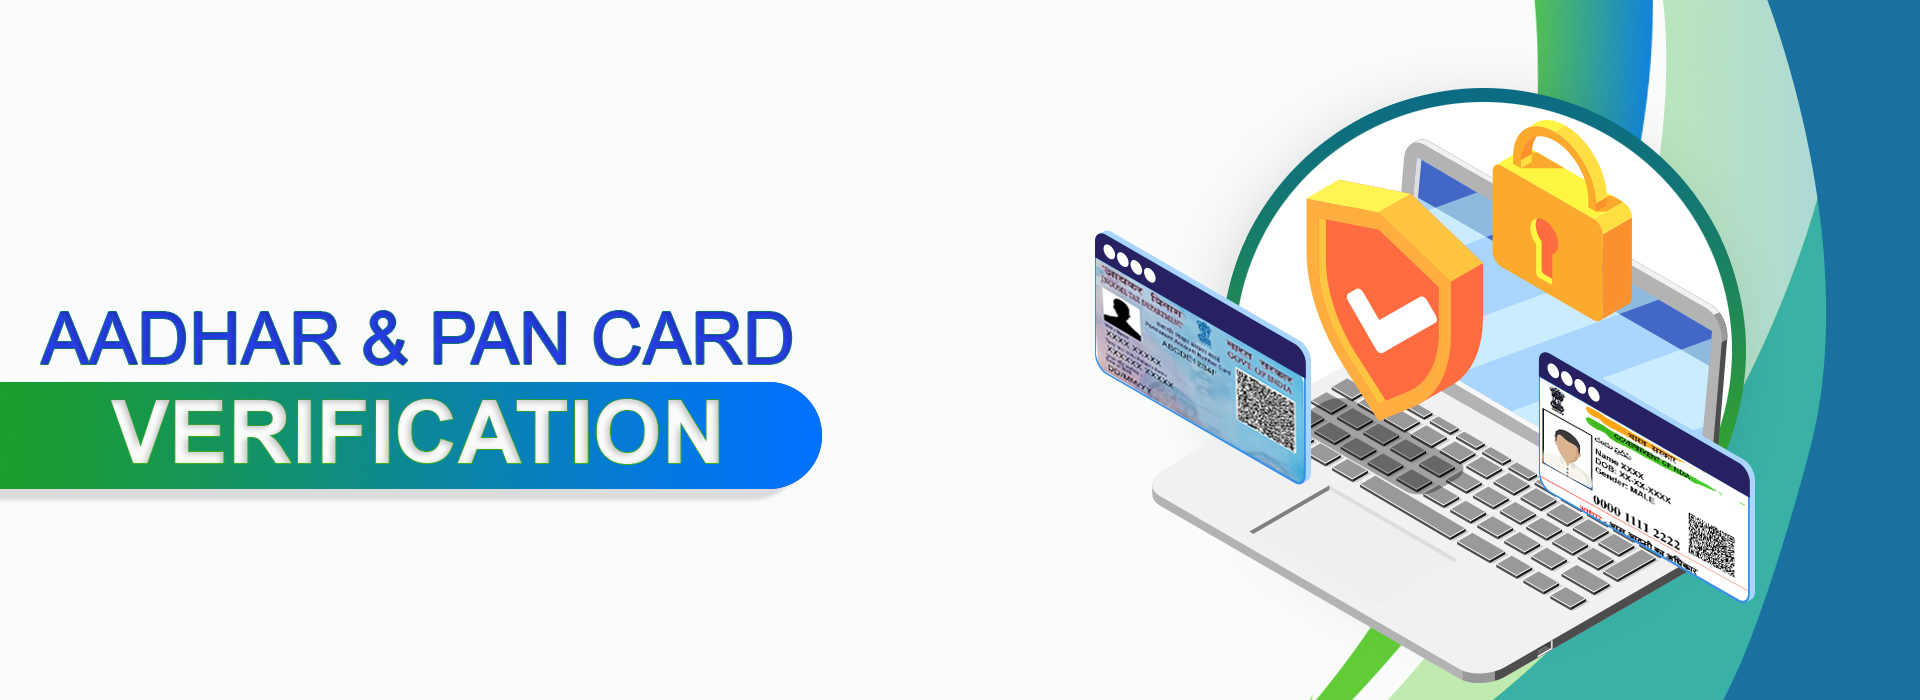 Aadhar & Pan Card Verification